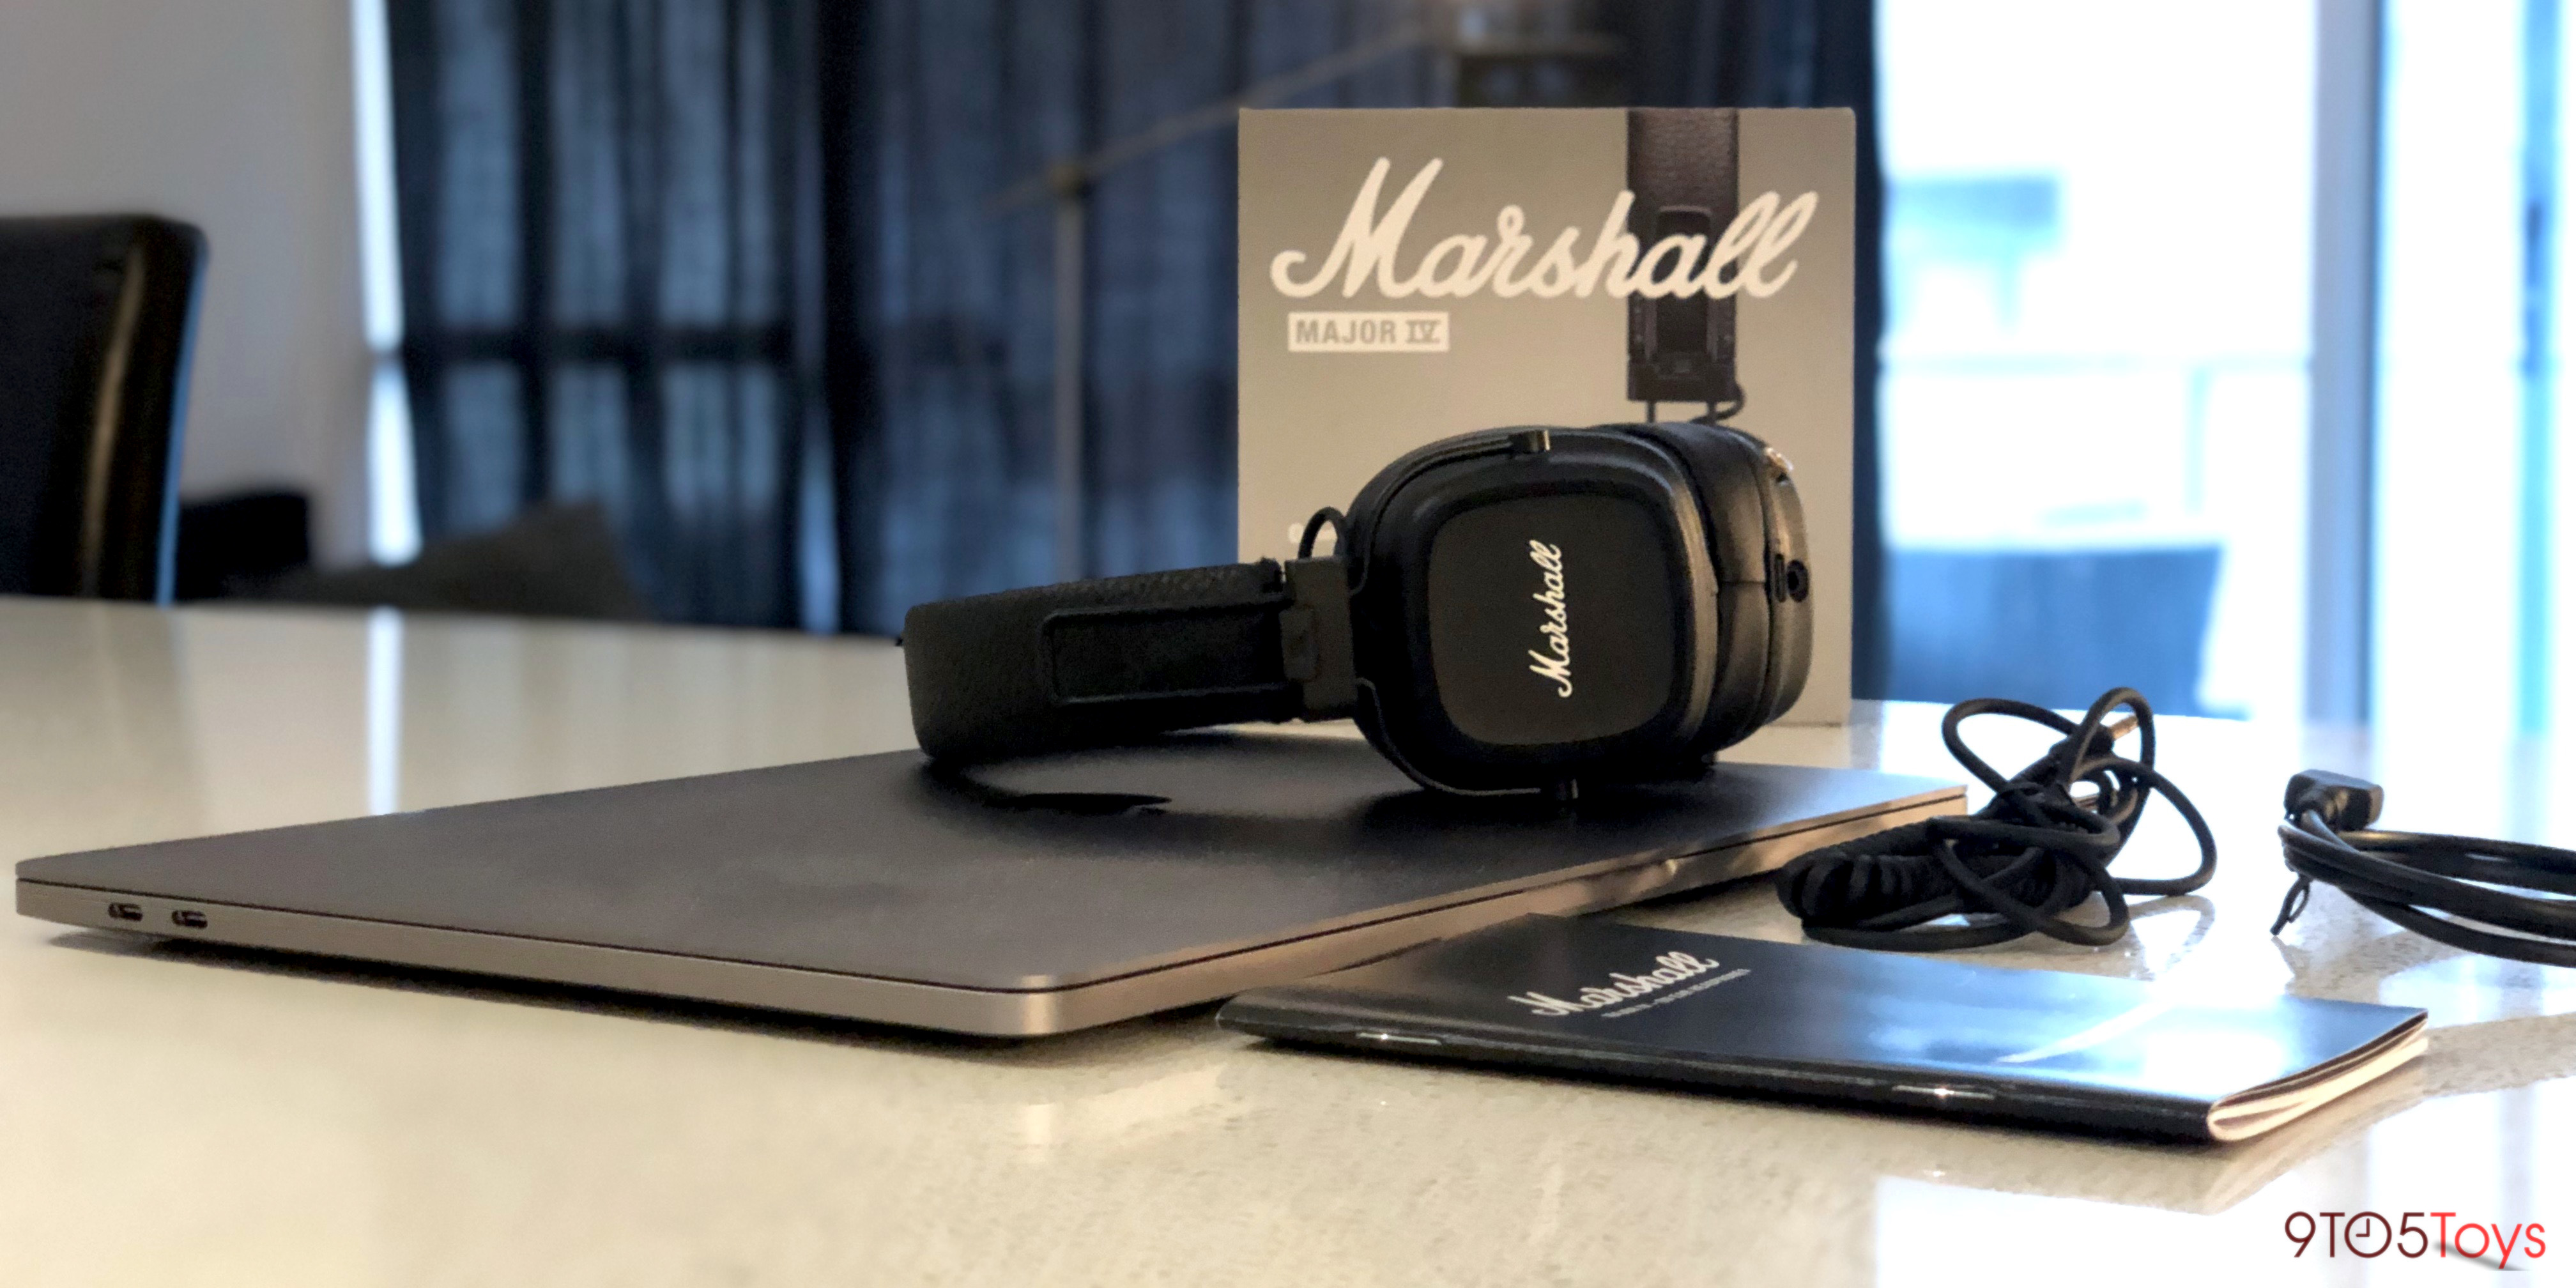 Marshal Major IV Headphones Review 01 